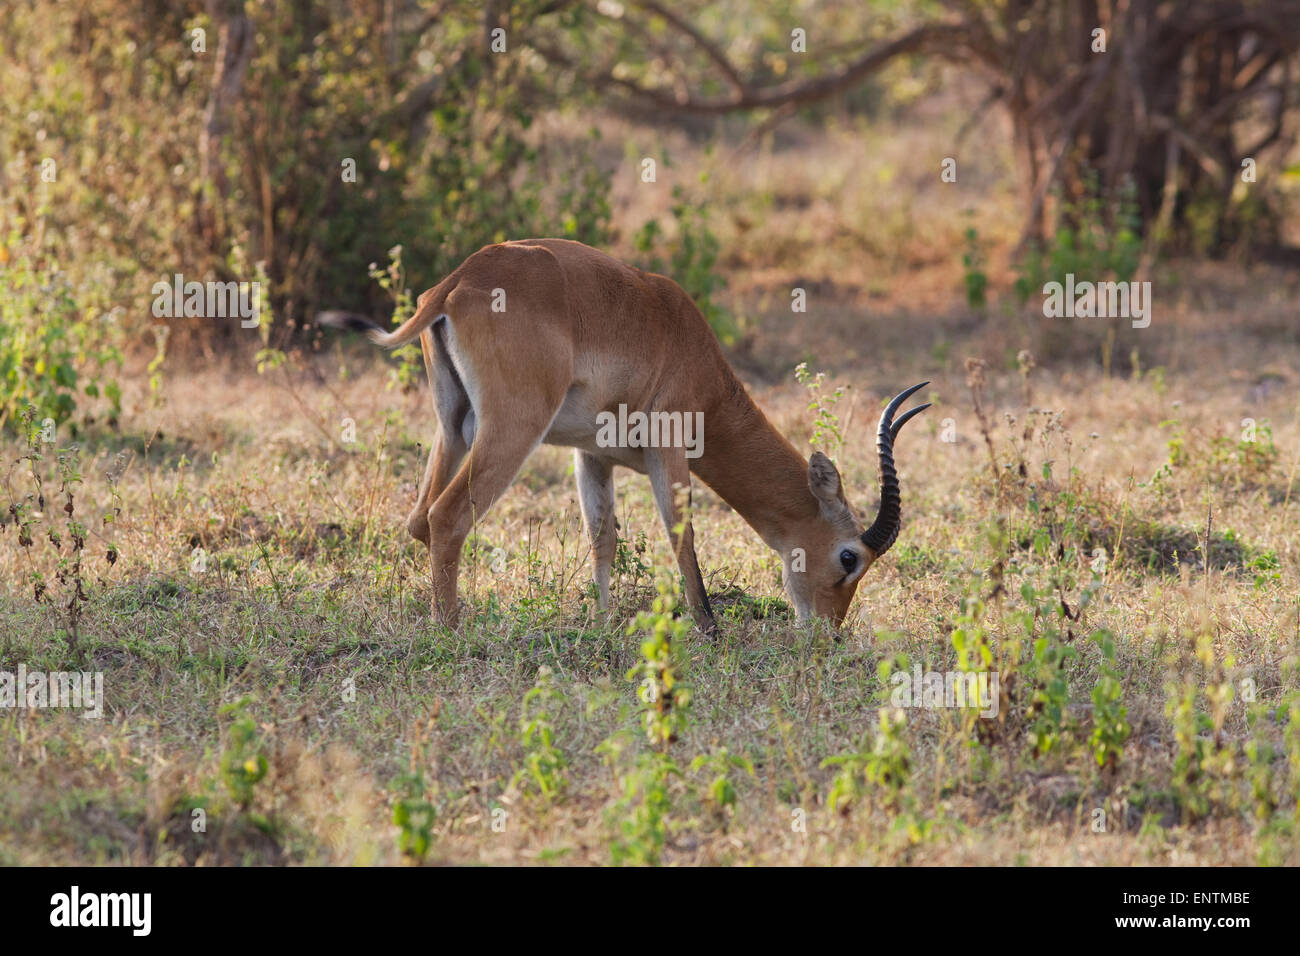 Buffon Kob or Western Kob (Kobus kob). Male, or Buck, grazing. Mole National Park. Ghana. West Africa. Note movement of tail. Stock Photo